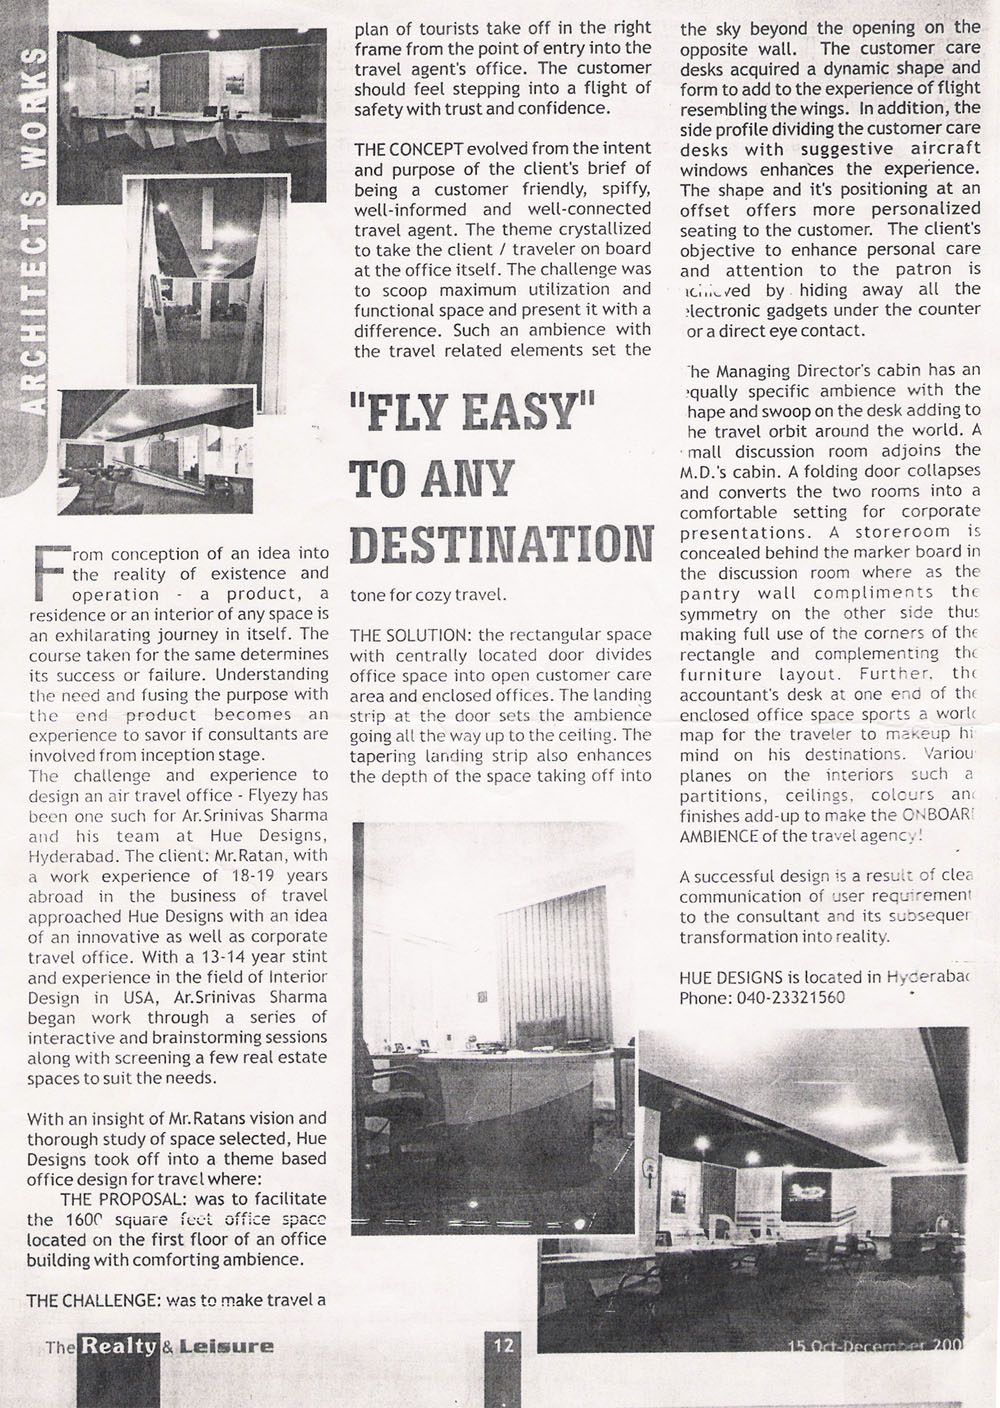 Flyezy office article